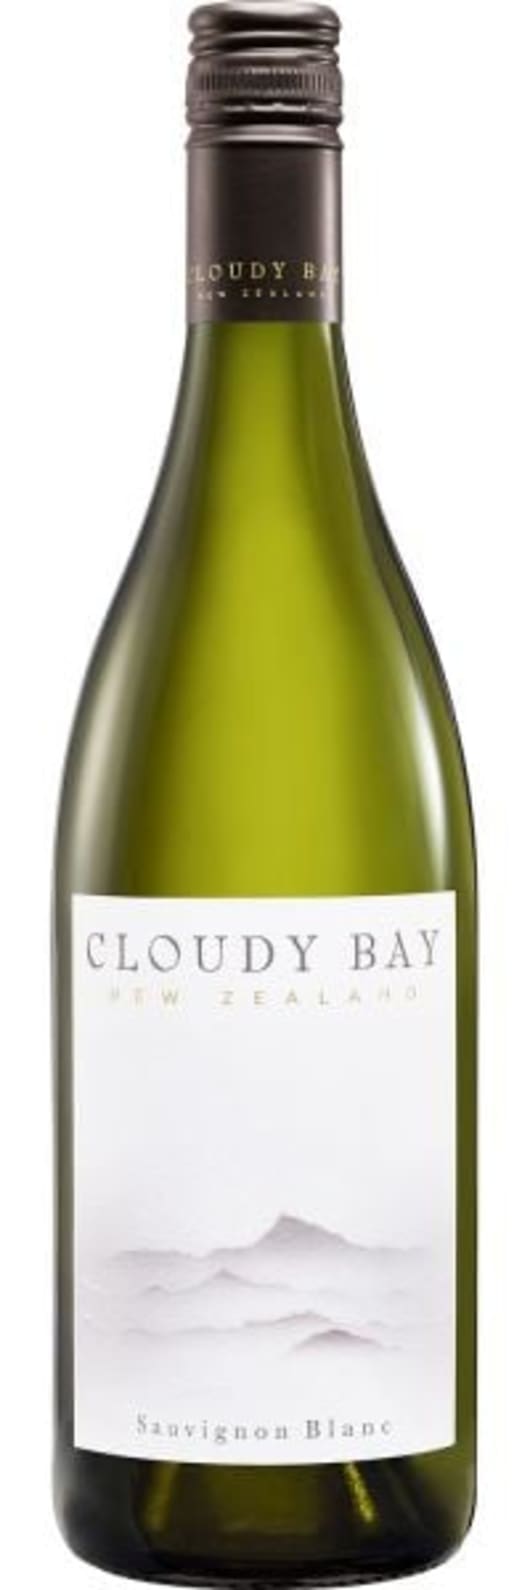 Cloudy Bay Sauvignon Blanc - Mike's Wine and Spirits, Kansas City, MO